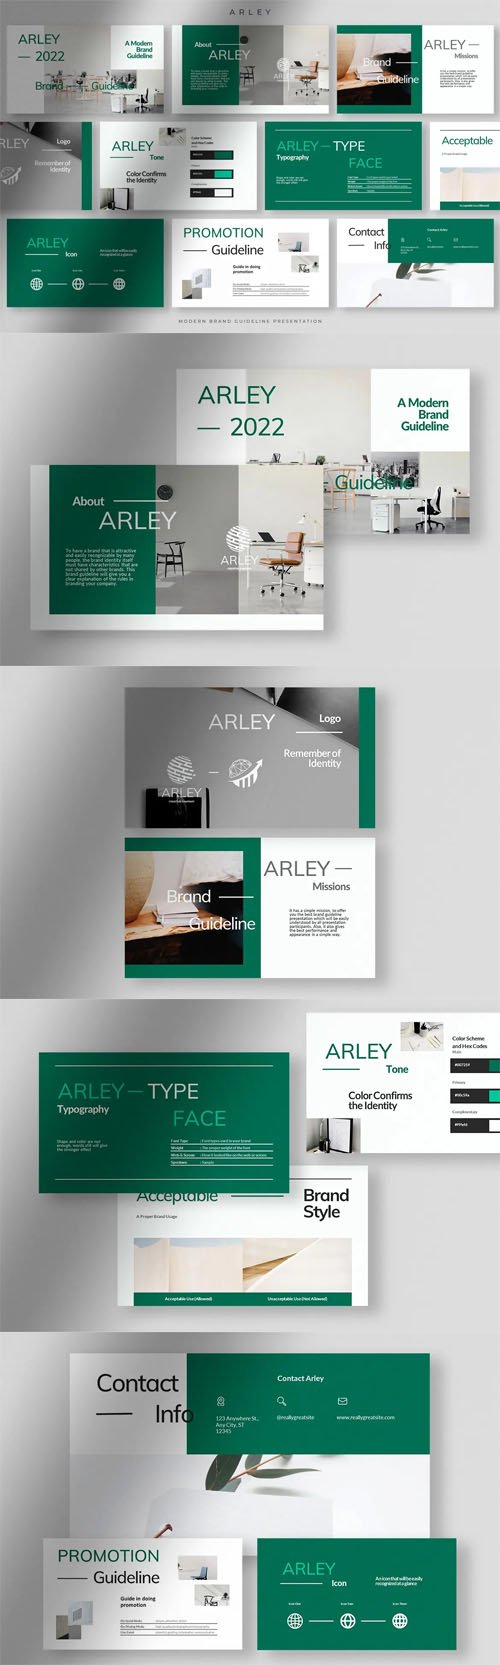 Arley Presentation - Brand Guideline Powerpoint Template